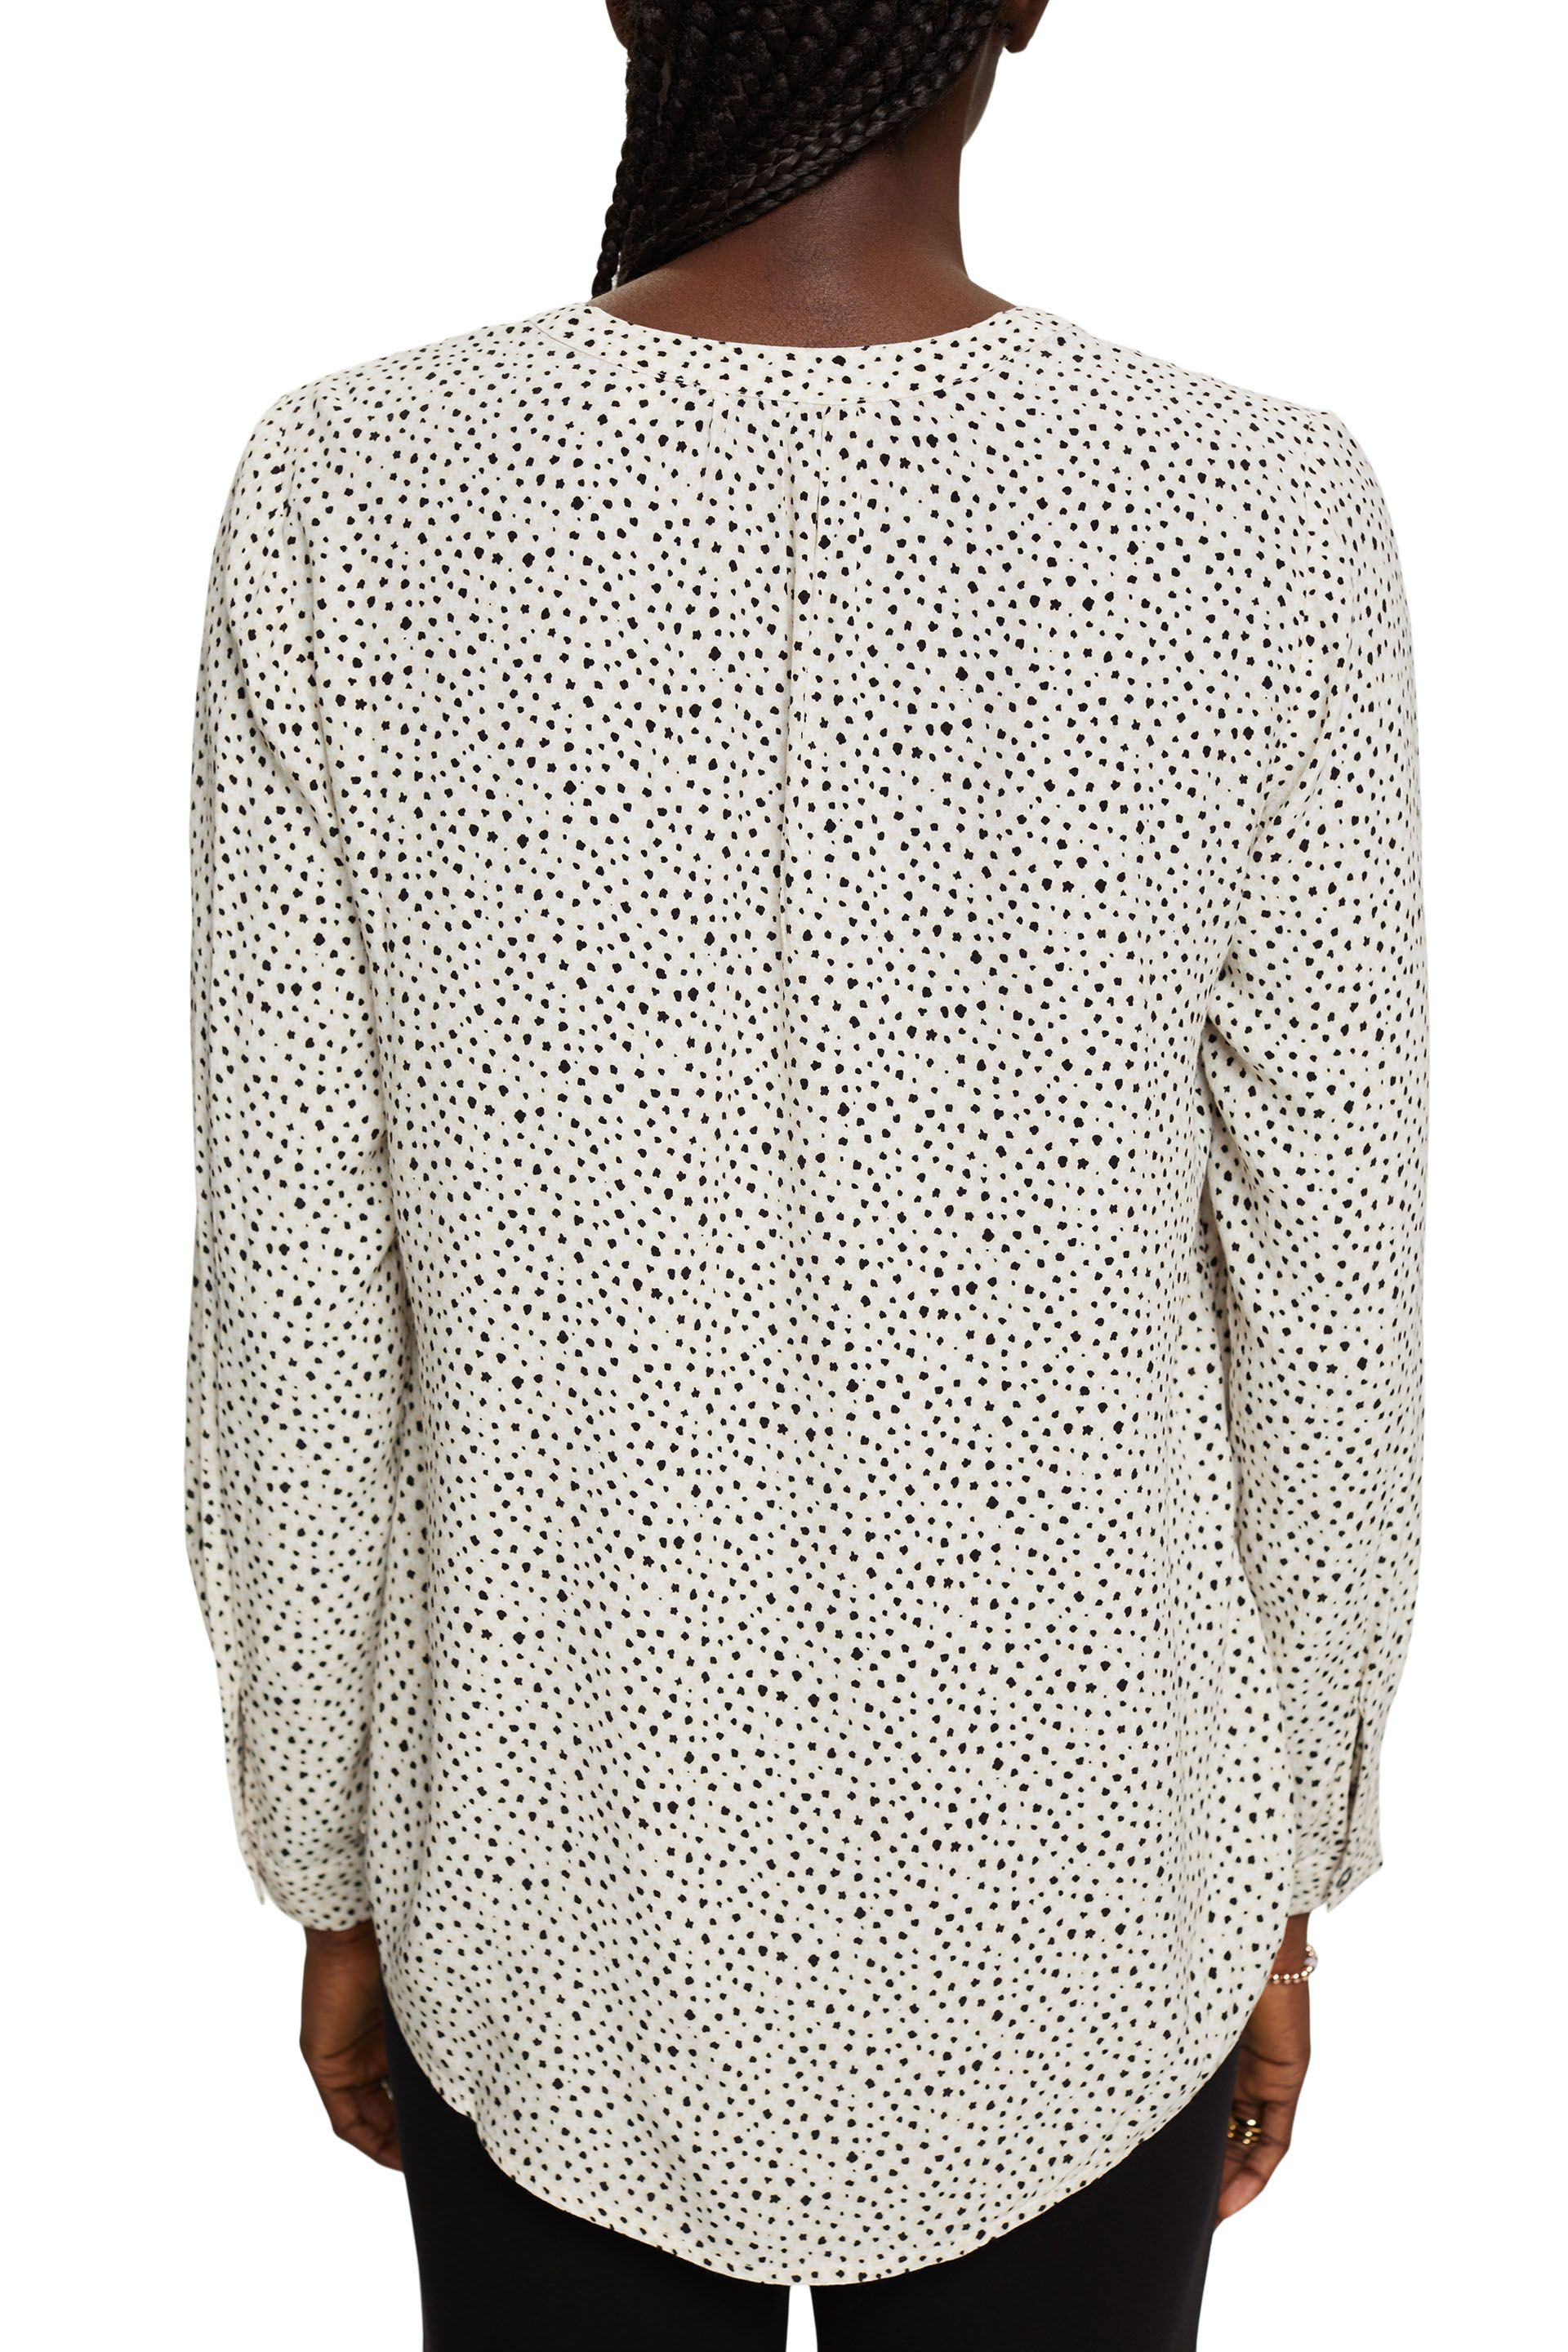 Esprit - Patterned blouse, White, large image number 2